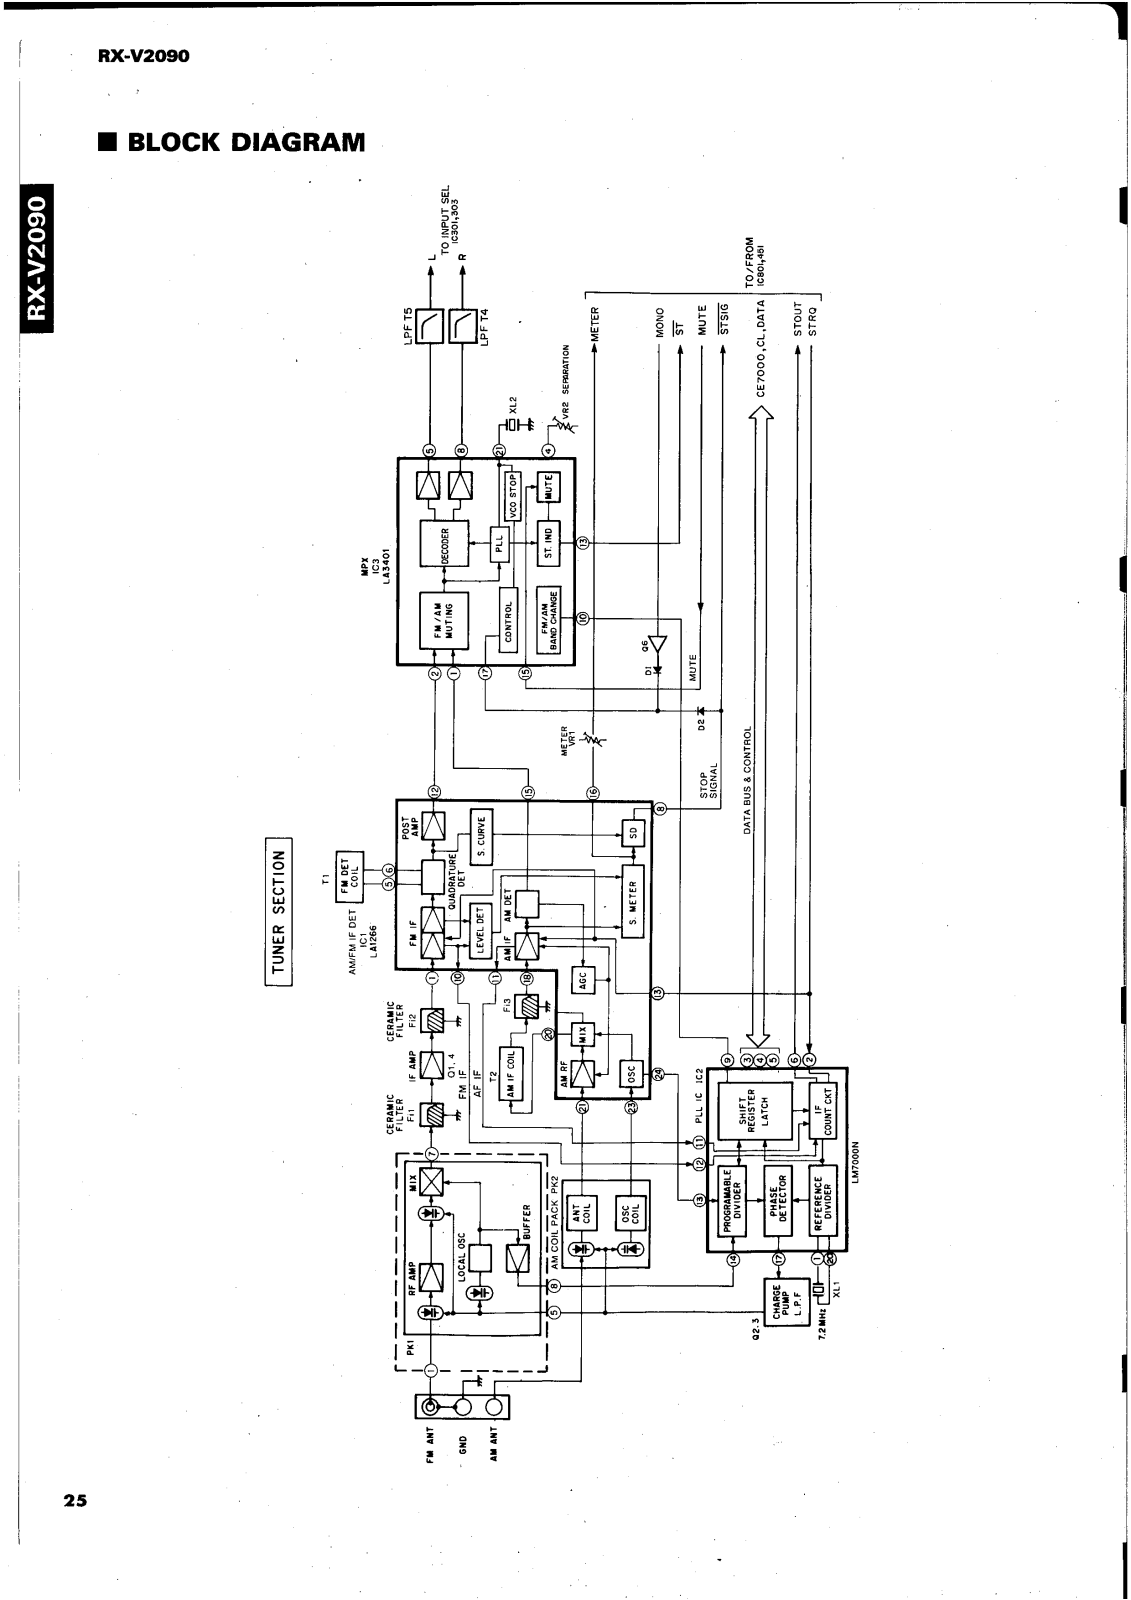 Yamaha RXV-2090 Schematic